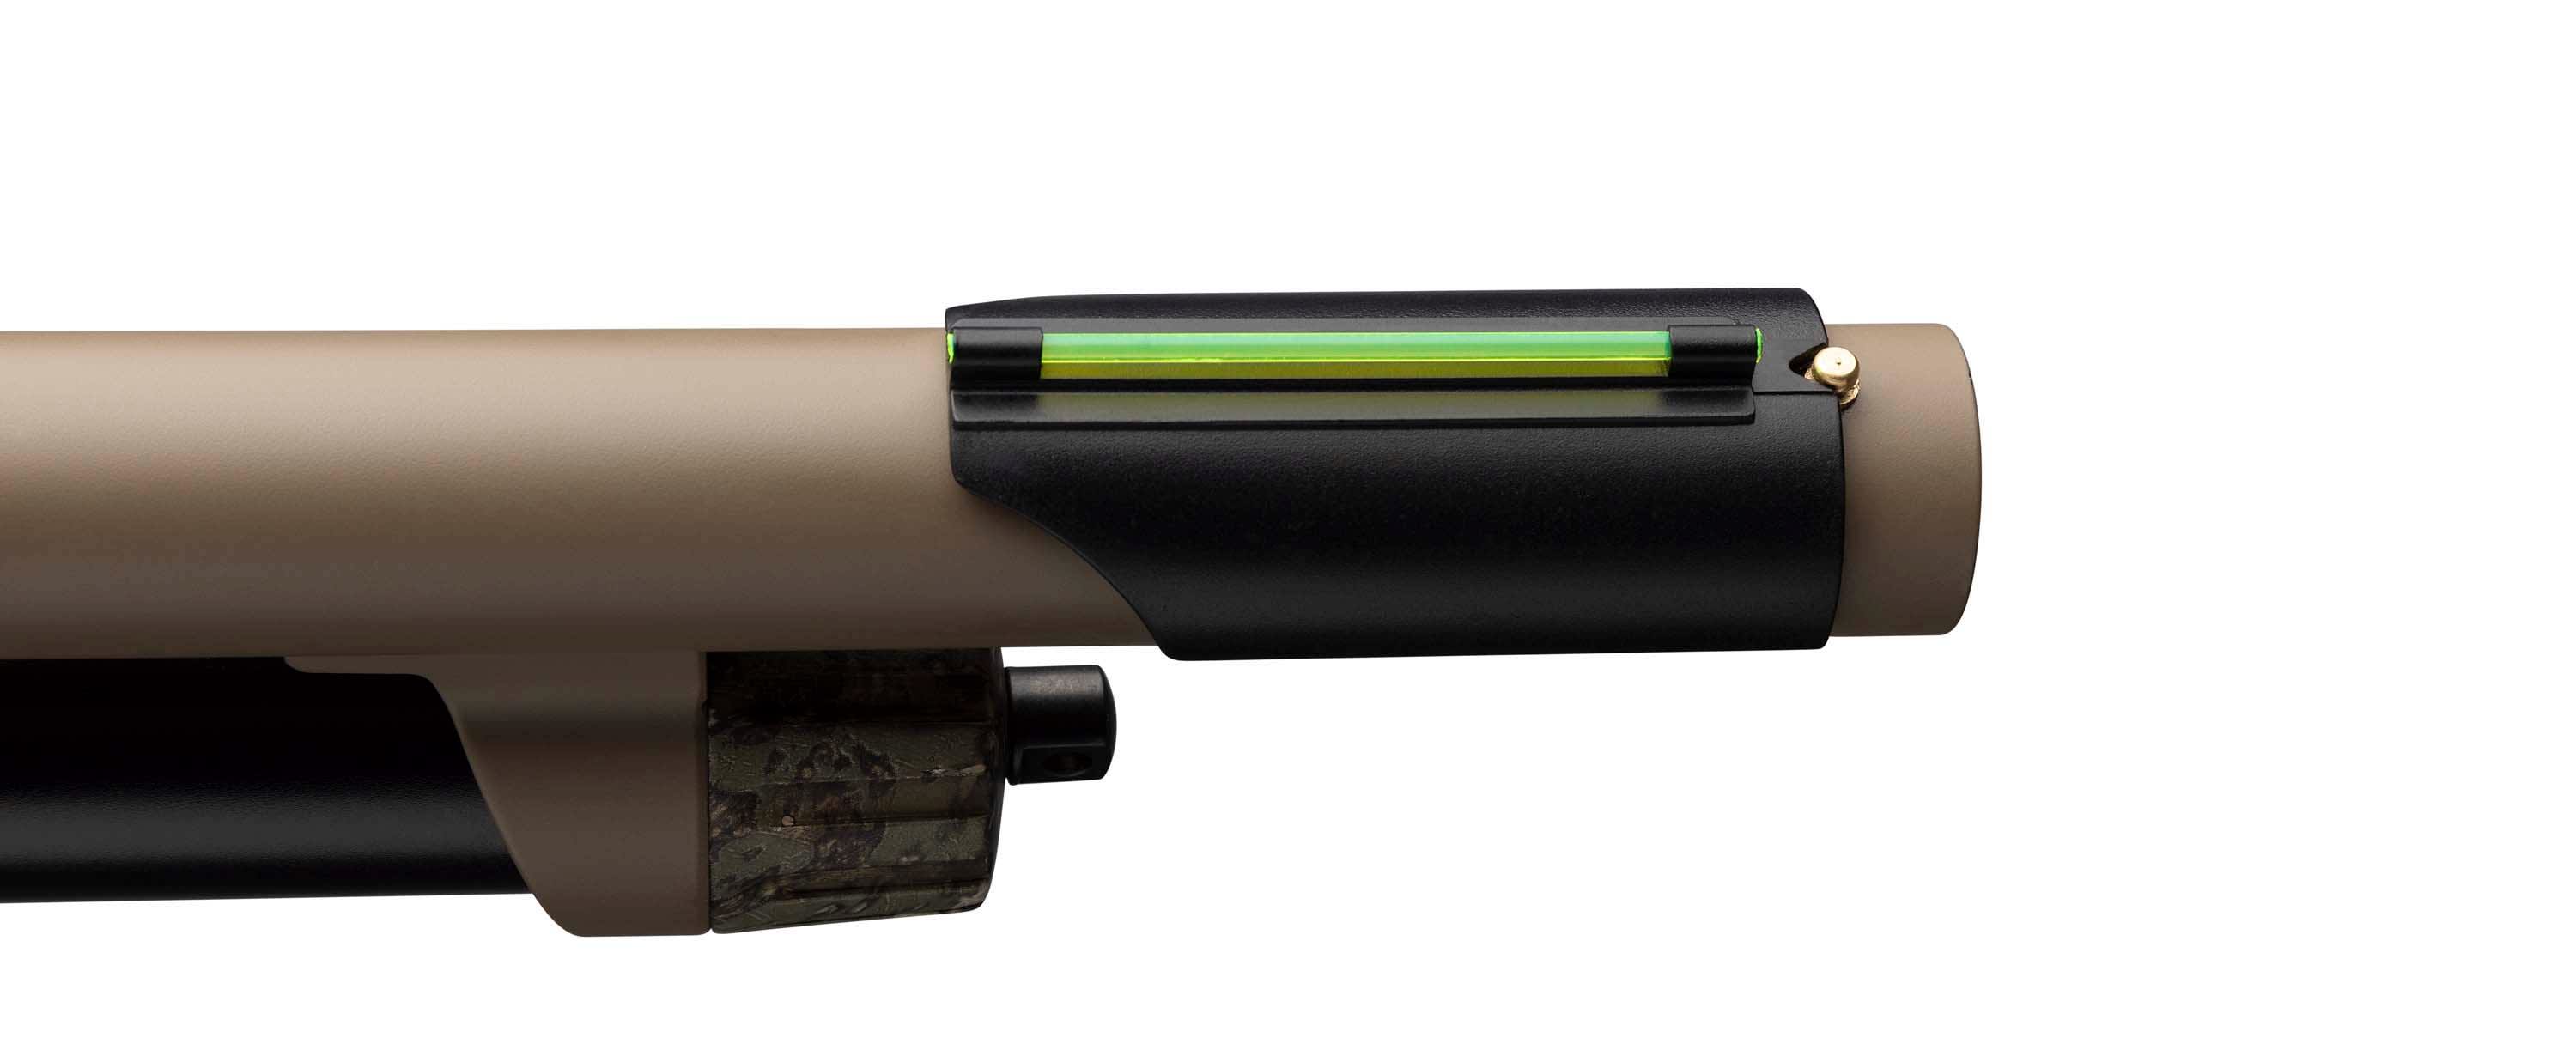 Winchester® SXP Strata Defender Pump-Action Shotgun